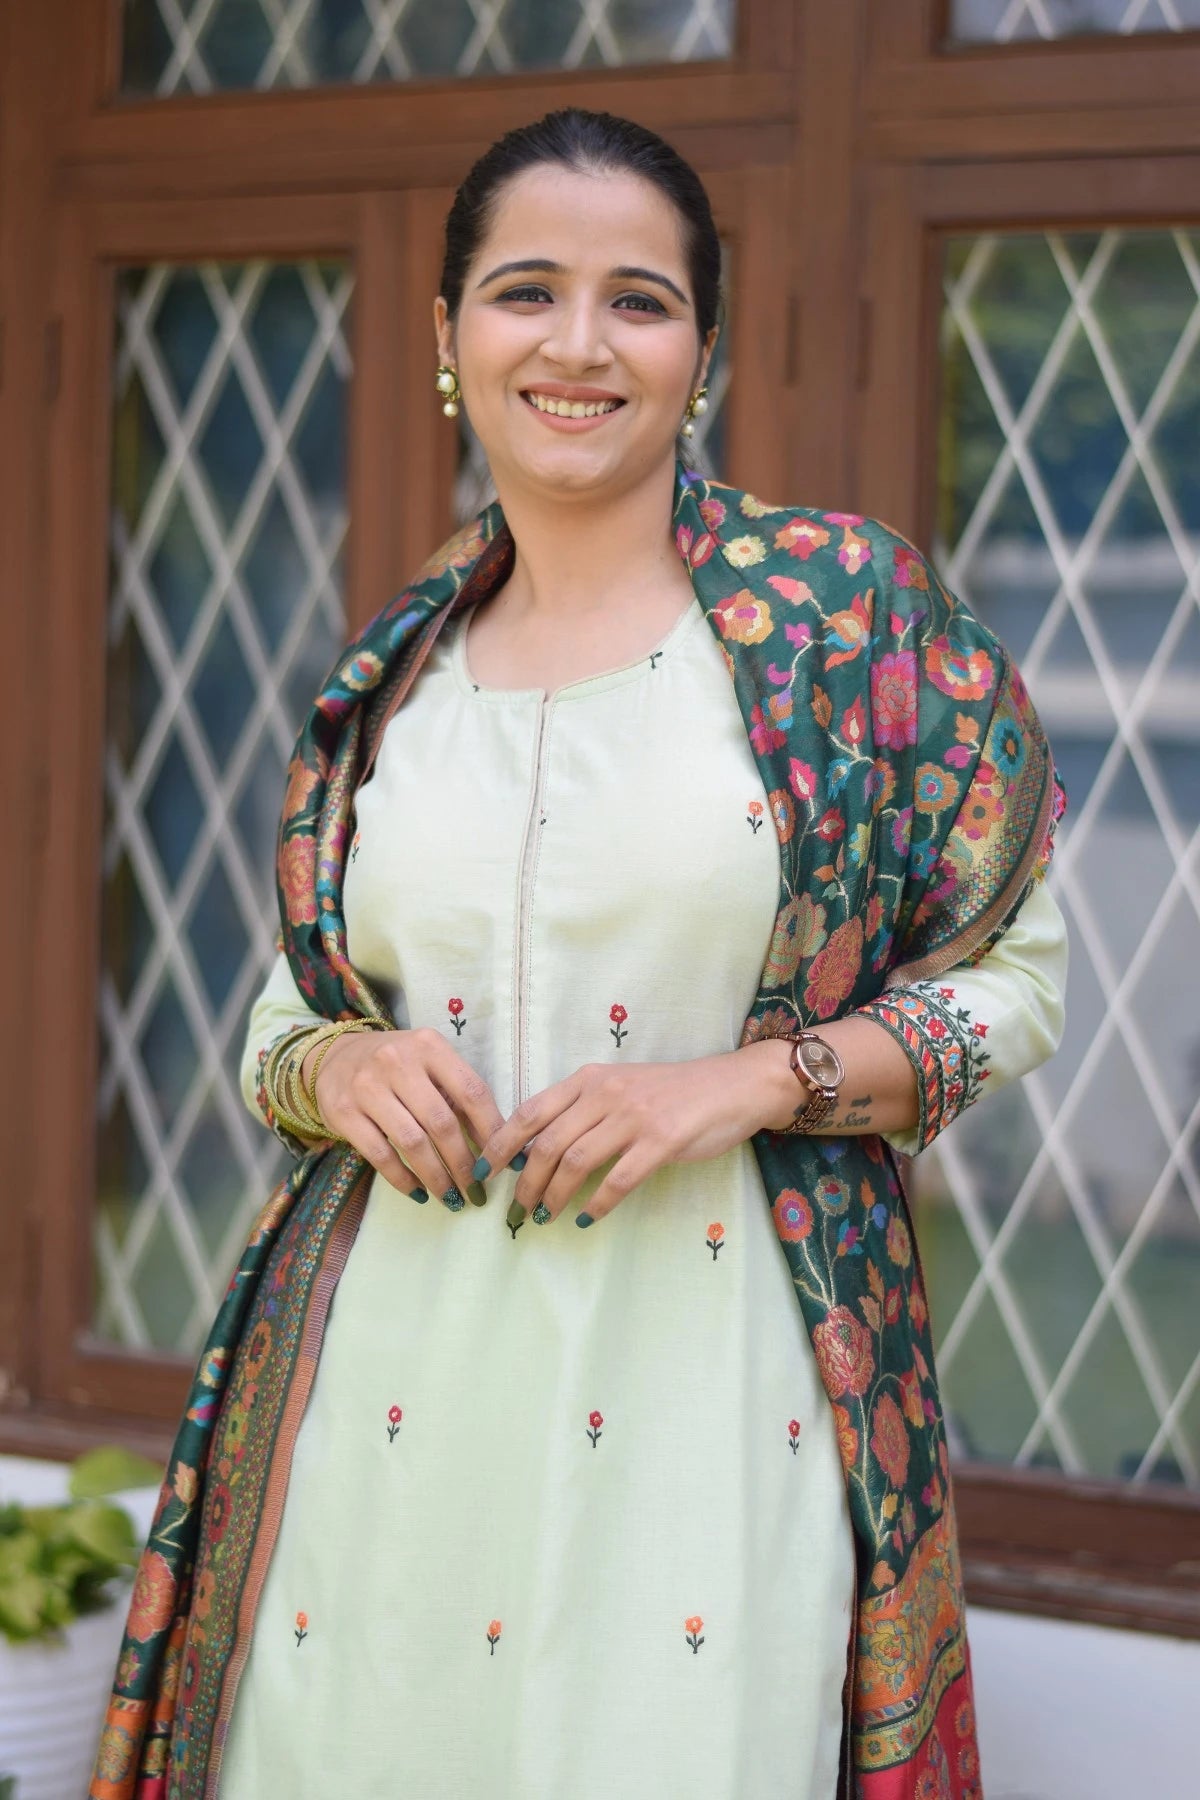 A classic ethnic attire of a woman in a green silk jamawar dupatta, chanderi resham embroidered kurta, and palazzo.